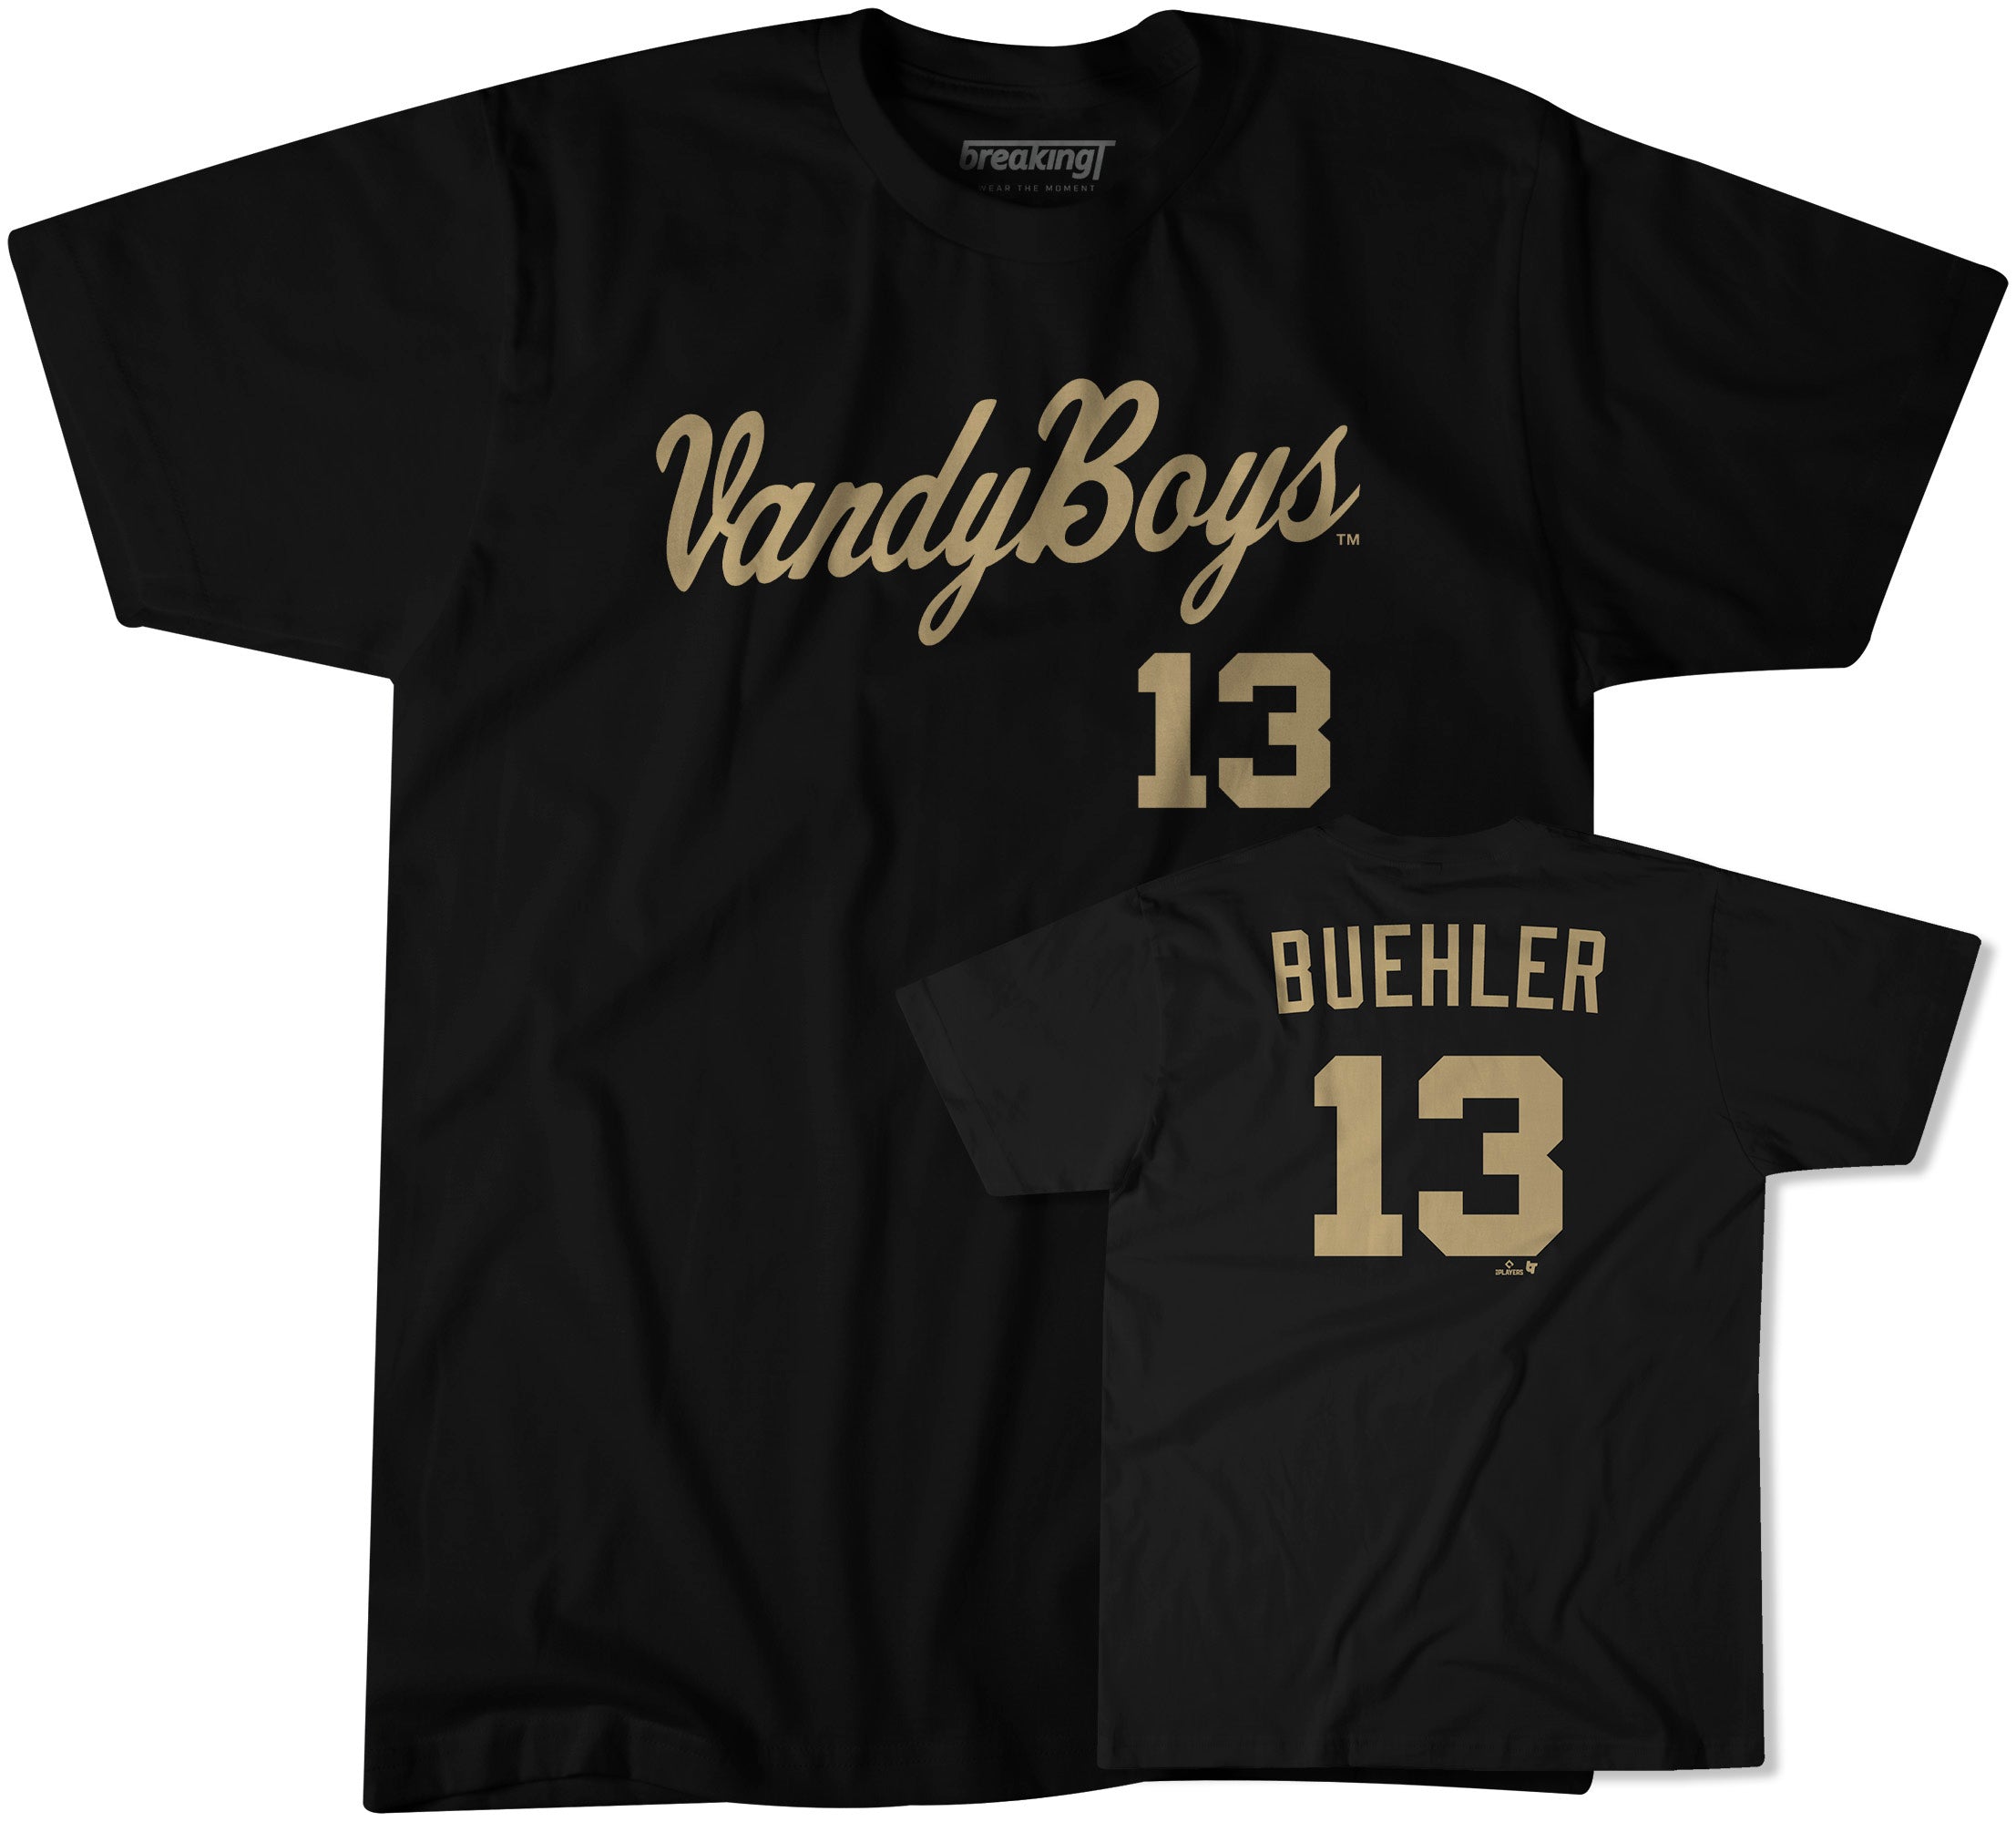 Walker Buehler to start for Vanderbilt tonight